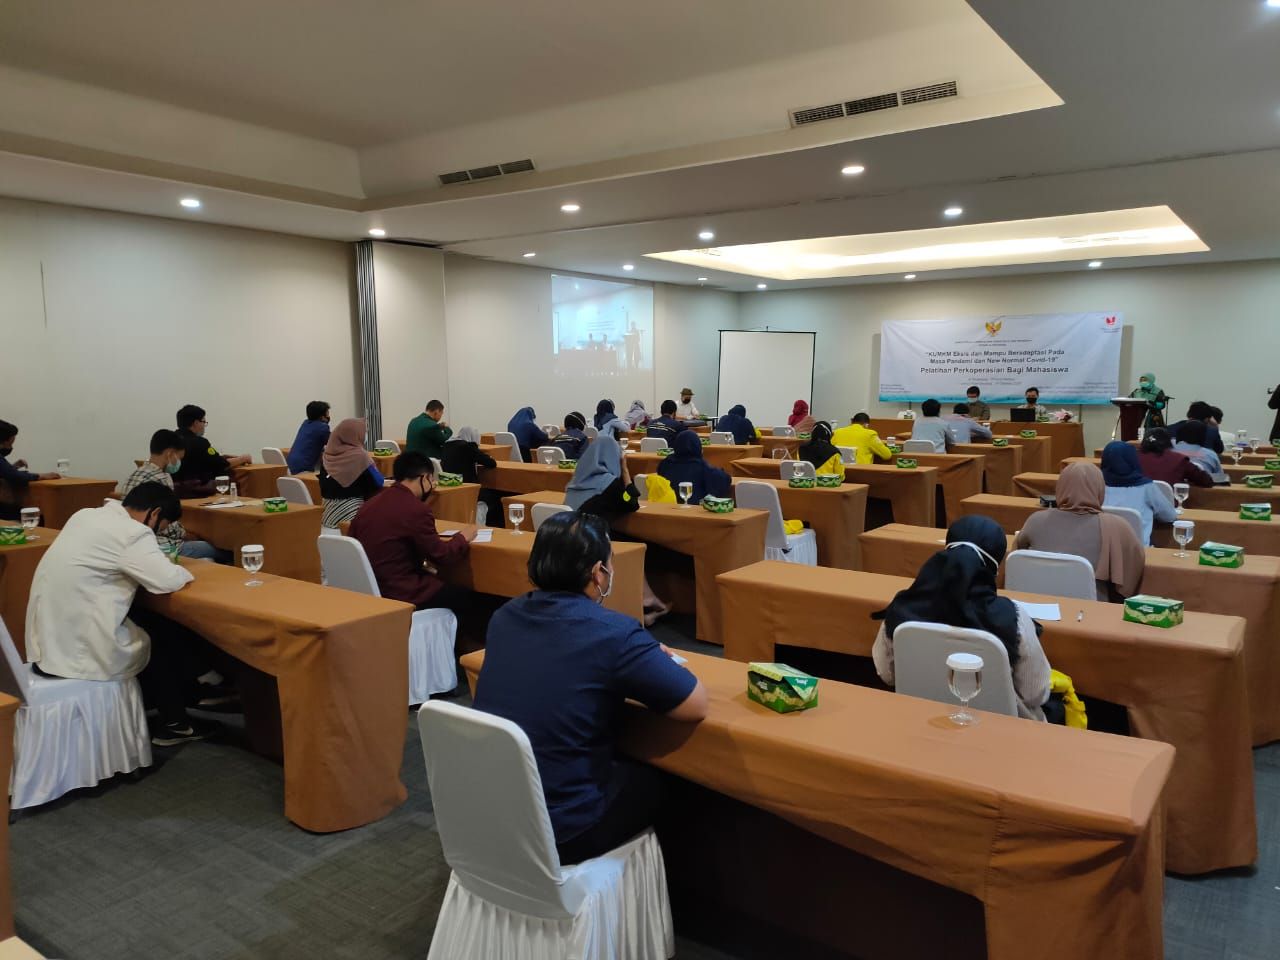 Suasana acara pelatihan perkoperasian yang digelar Kemenkop UKM bersama Kopindo di Hotel Lemo Serpong, Banten pada Sabtu 17 Oktober 2020